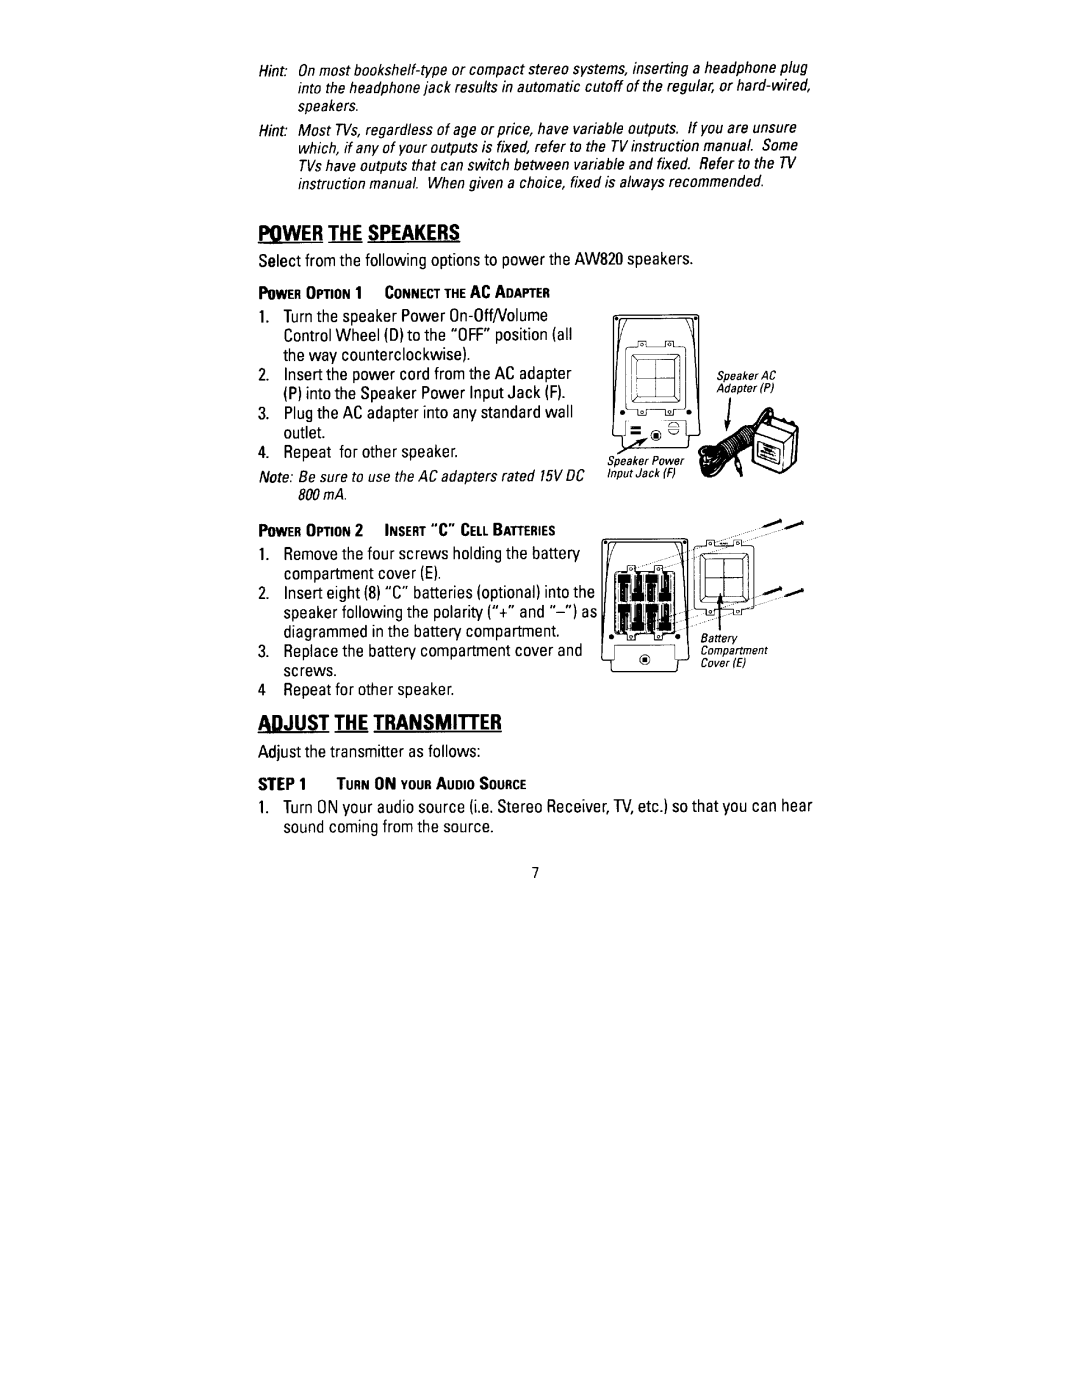 Recoton/Advent AW820 manual 